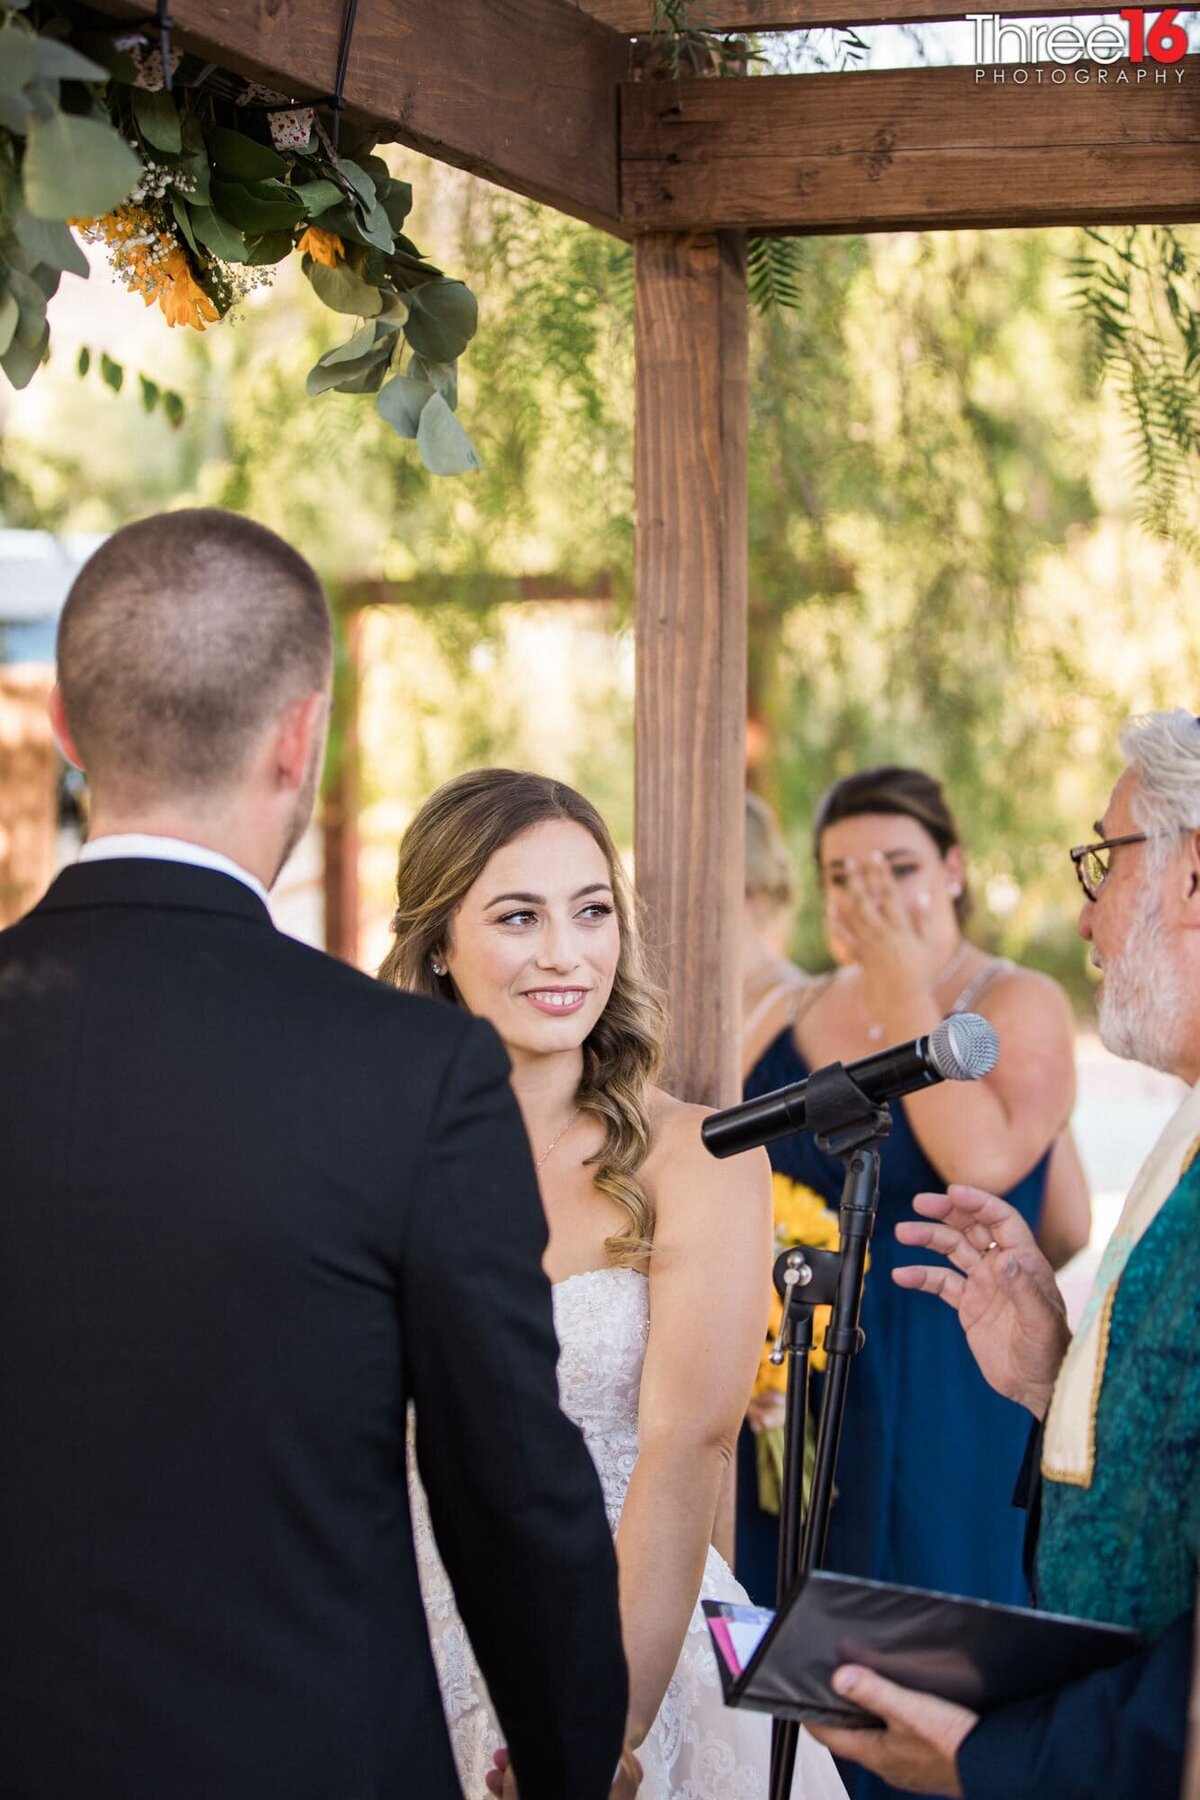 Rabbi speaks as the Bride looks at him